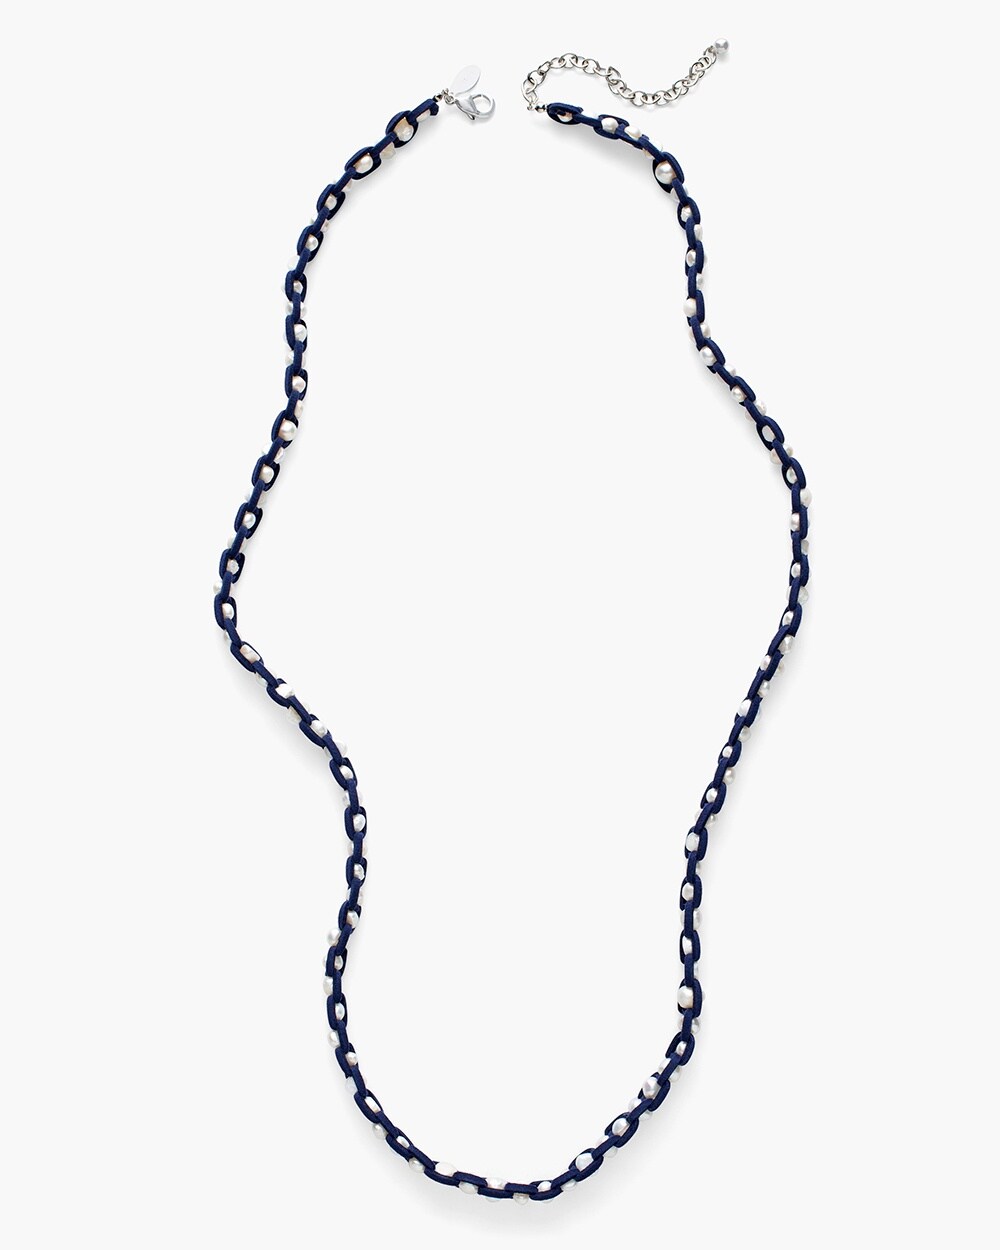 Paige Long Single-Strand Necklace